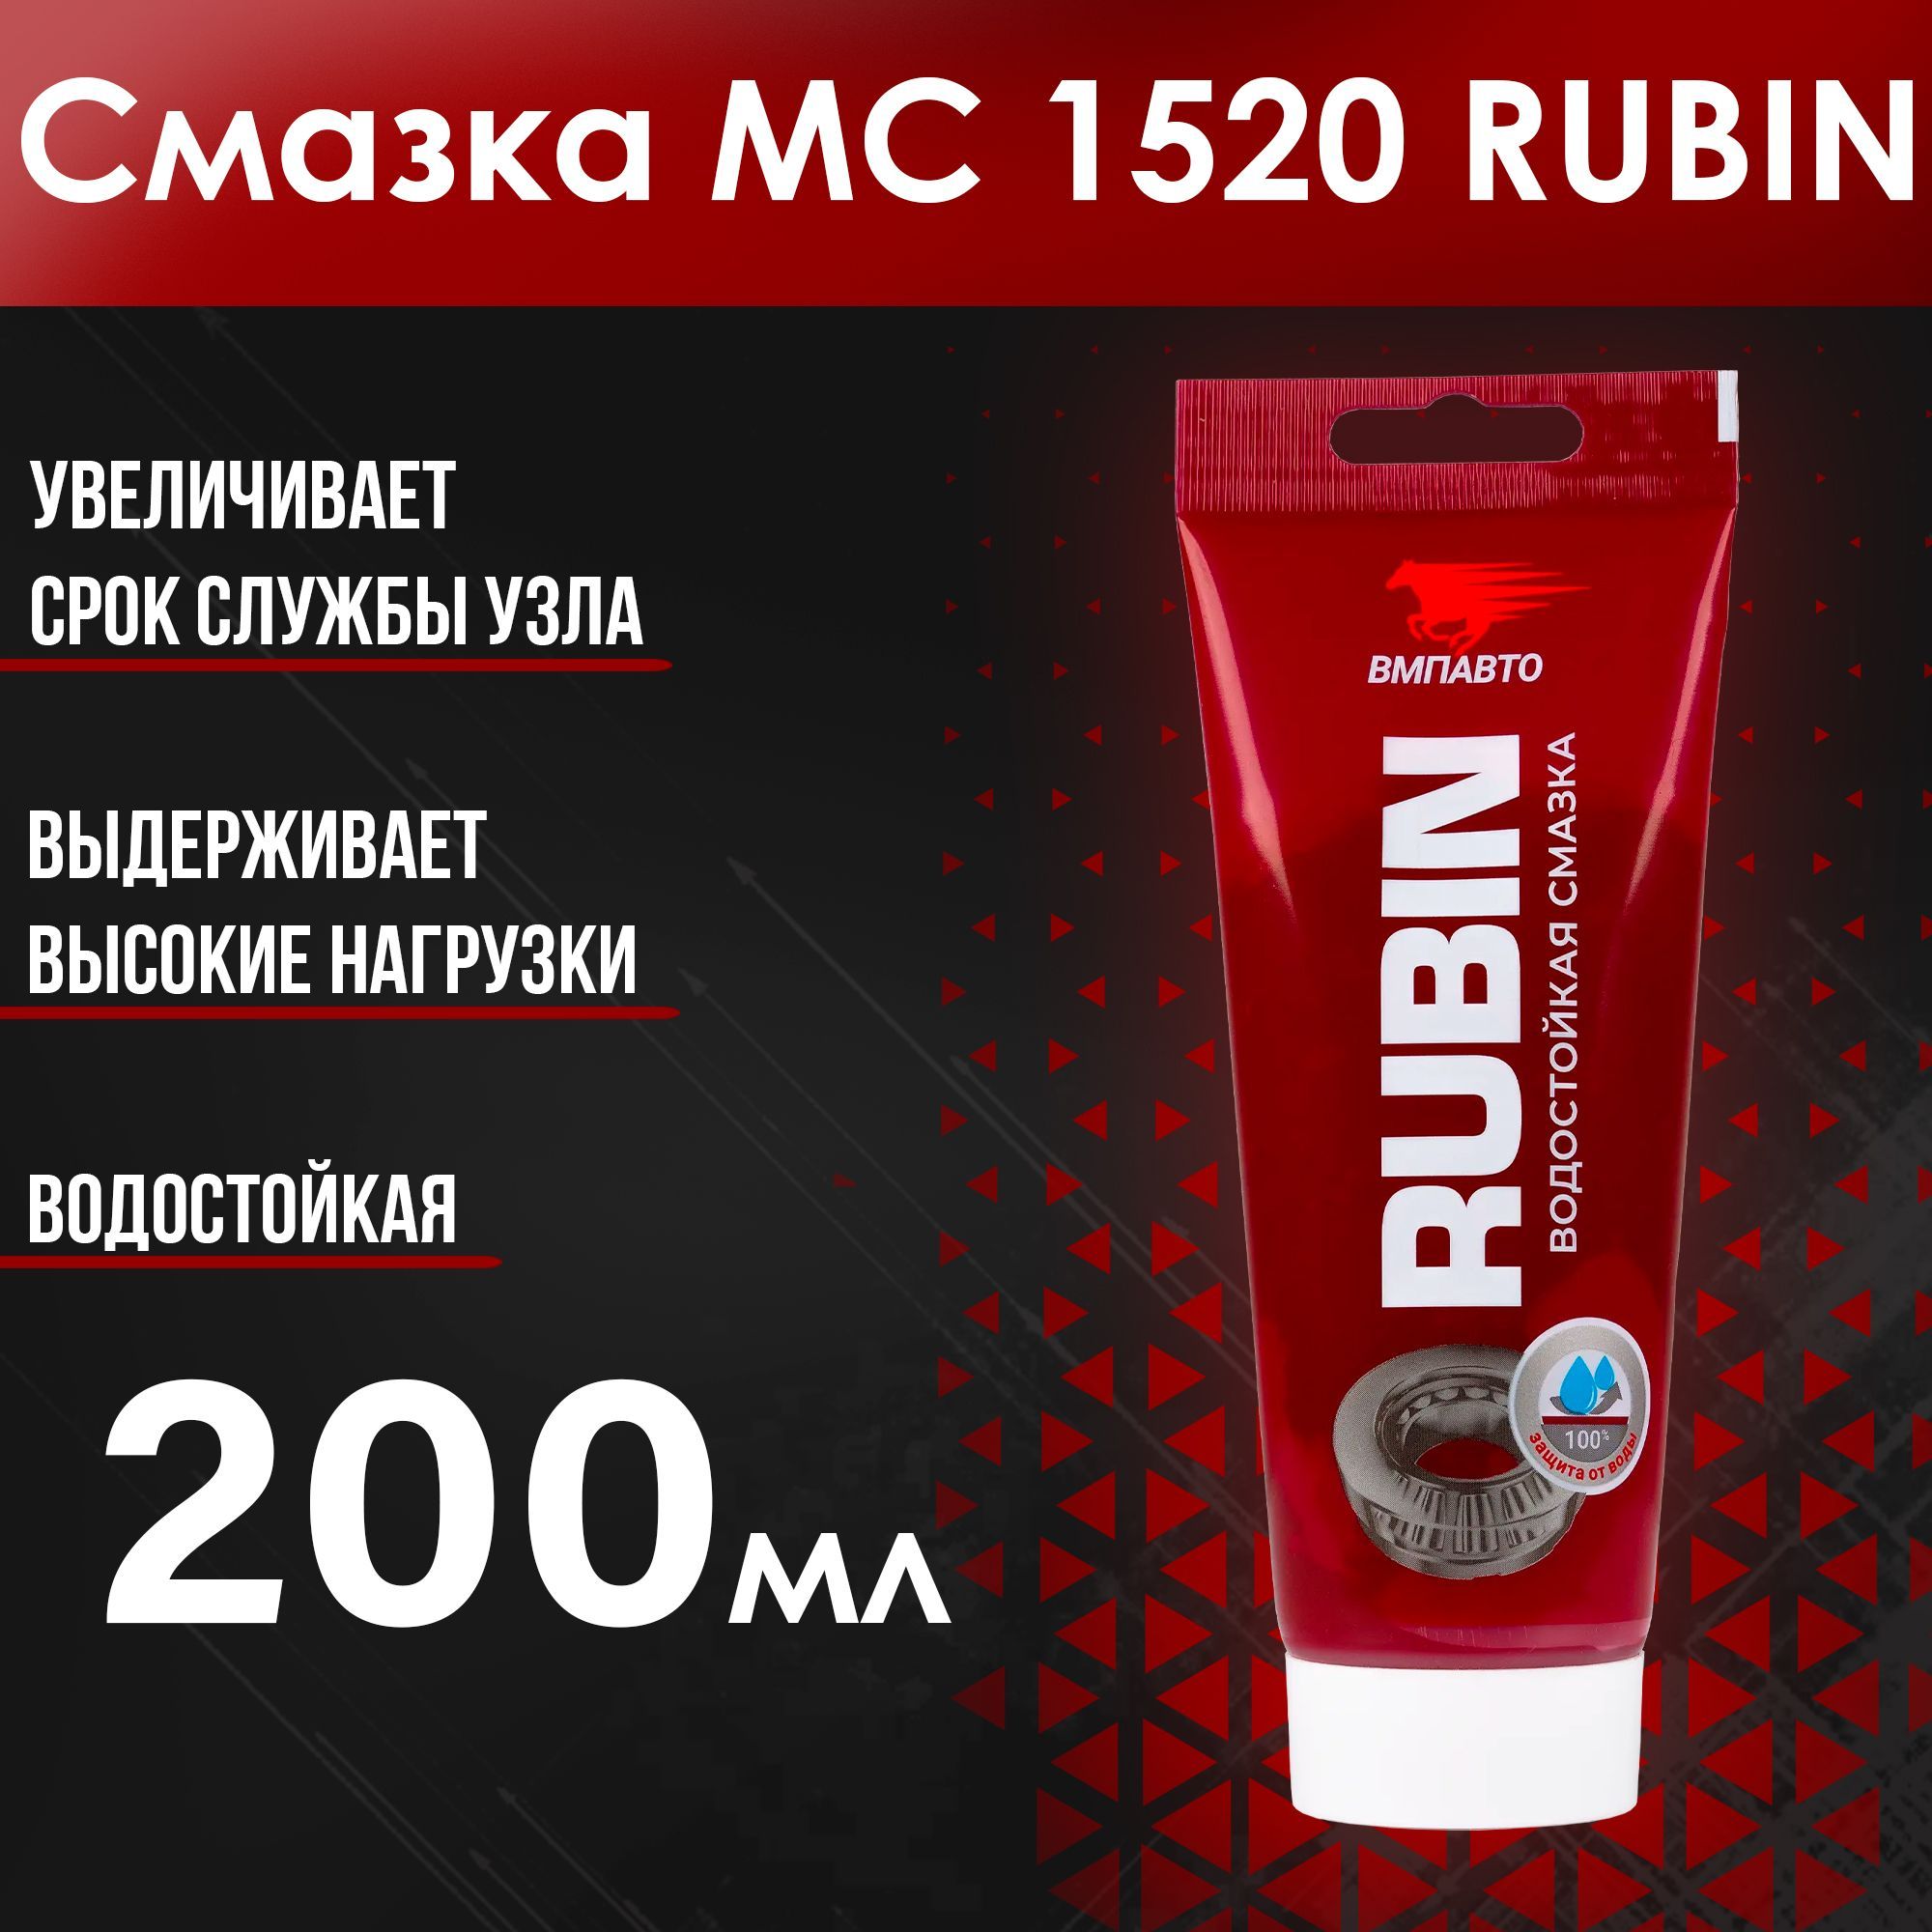 Мс 1520 rubin